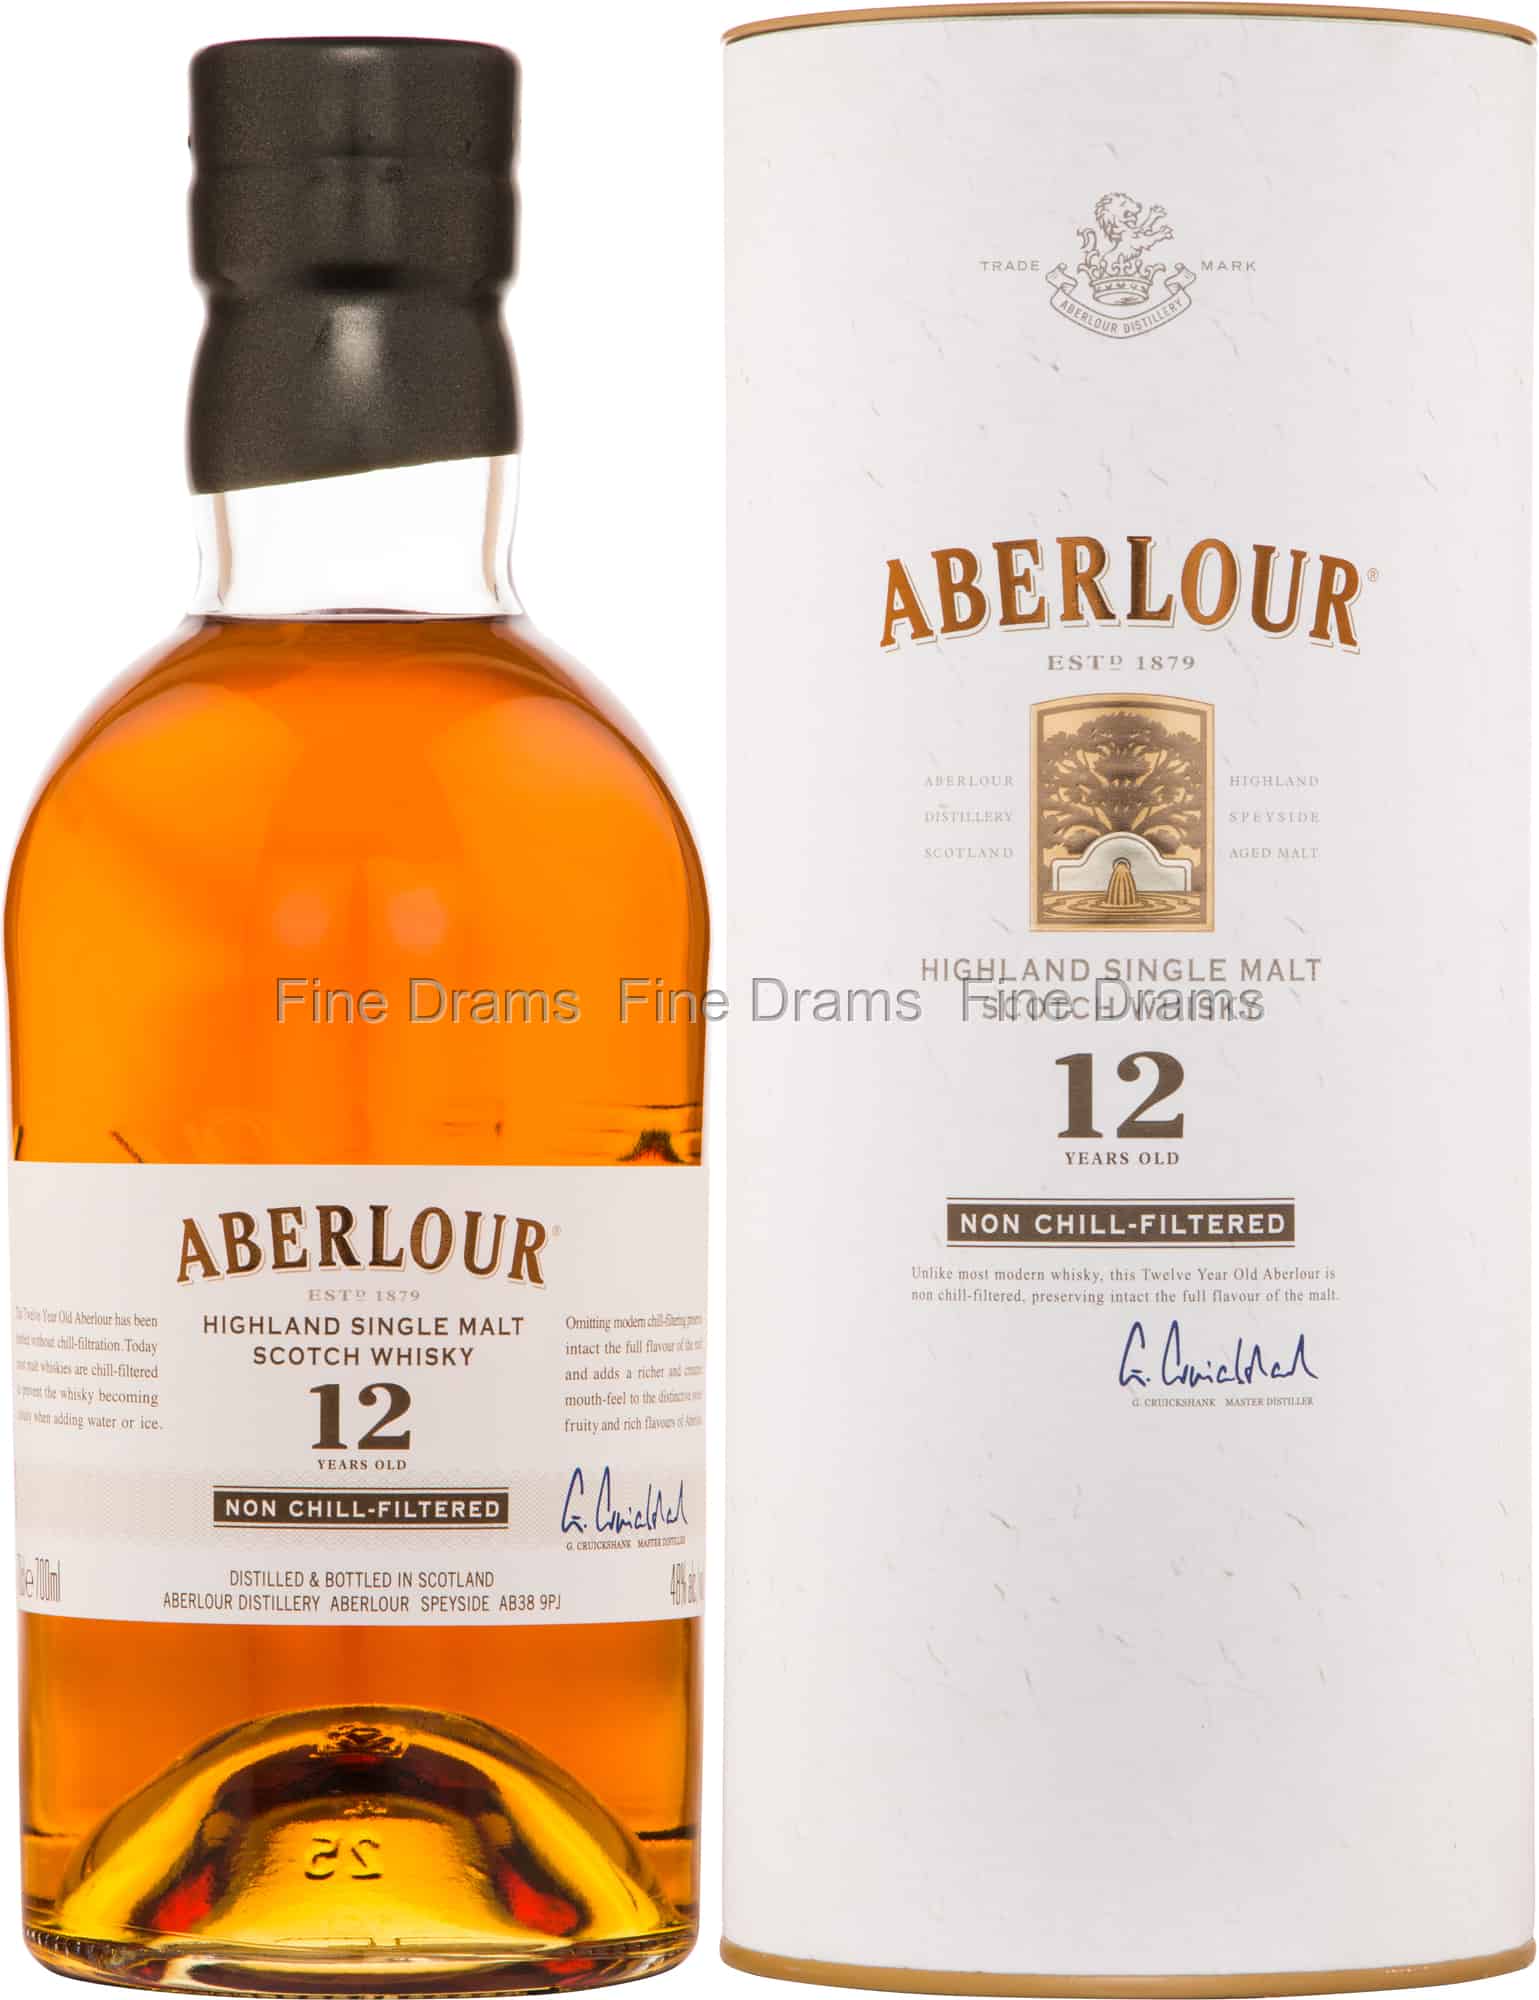 Whisky Aberlour 12 ans no chill speyside single malt scotch 48%vol 70cl